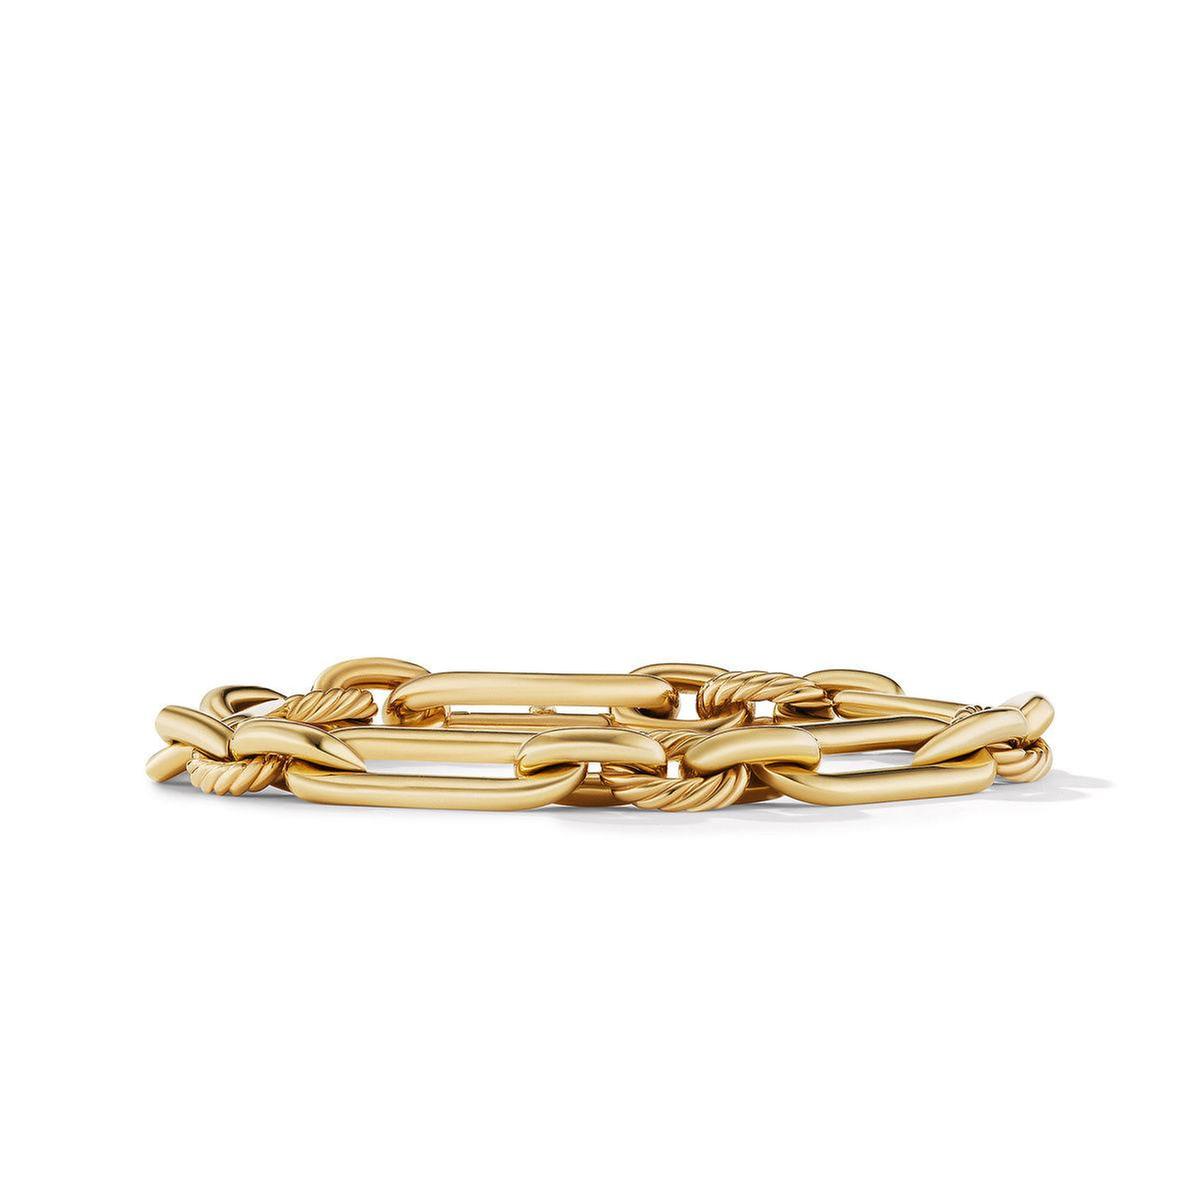 David Yurman Lexington Chain Bracelet in 18K Yellow Gold - Medium